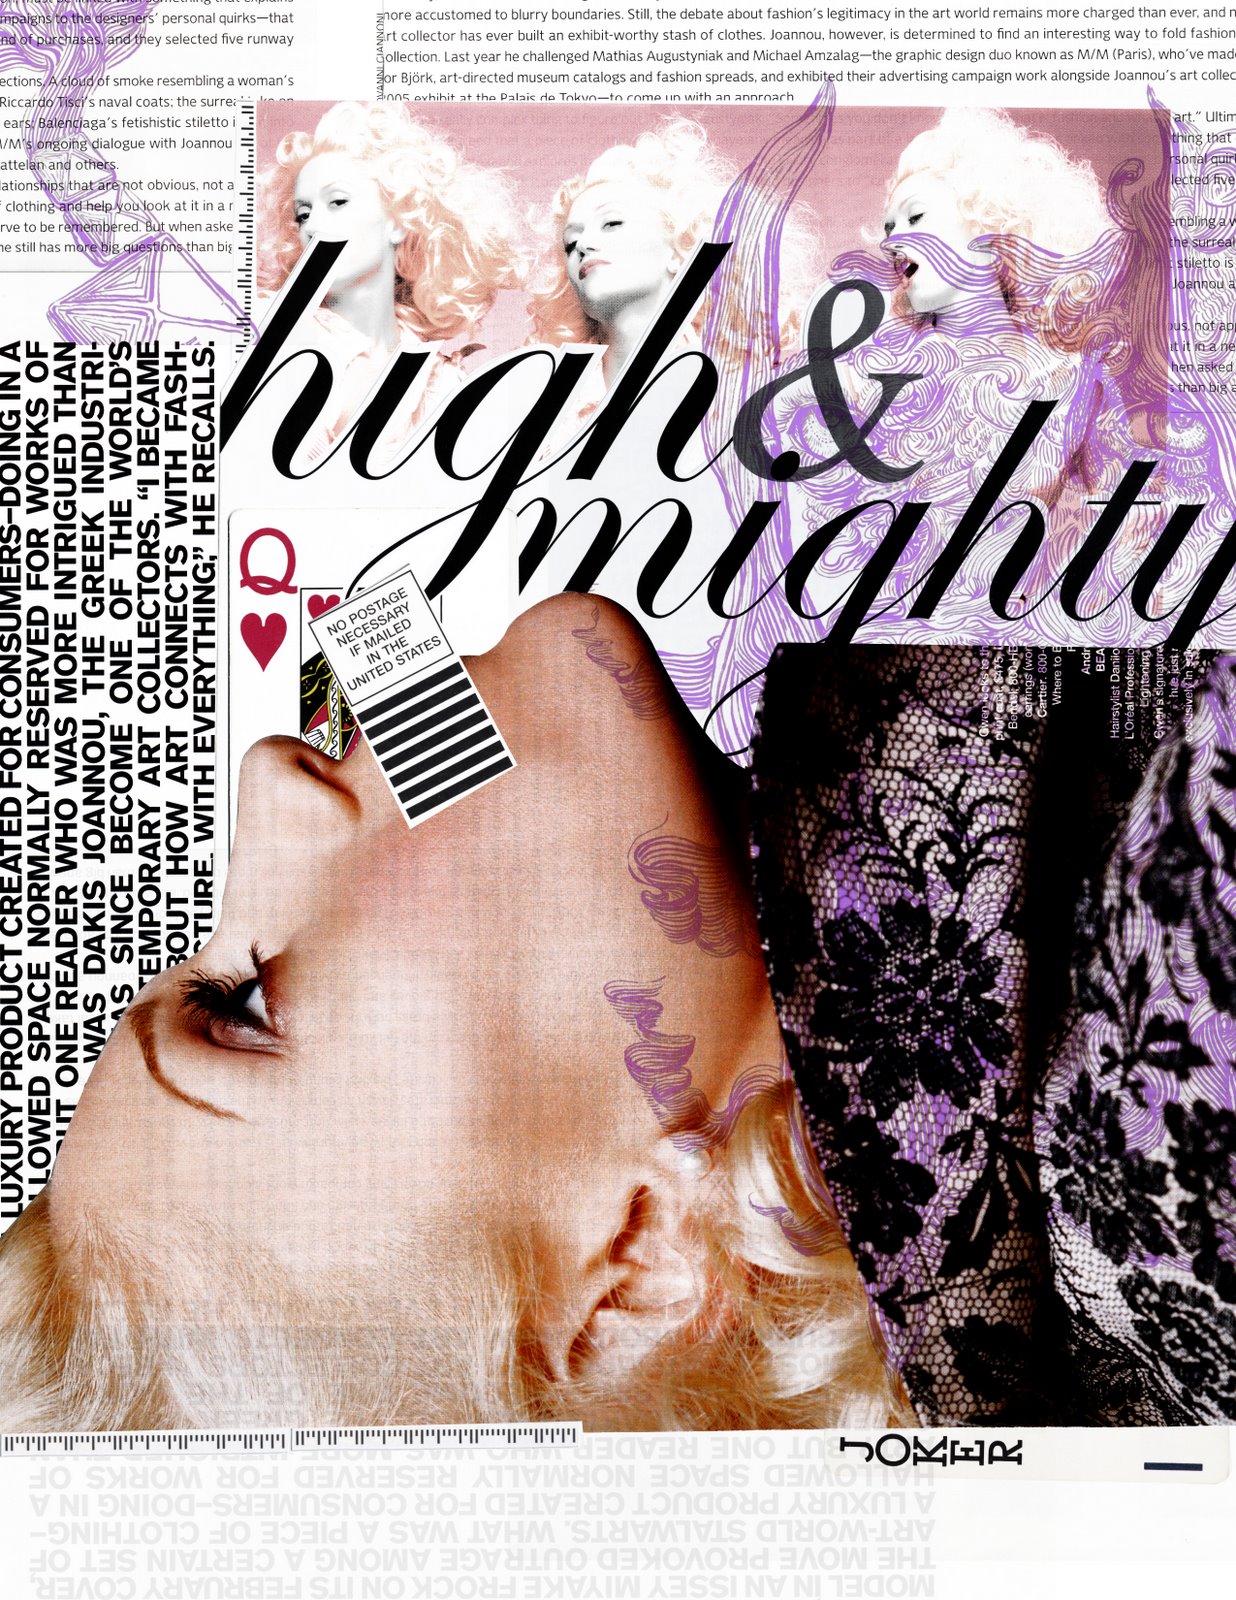 [high+mighty.jpg]